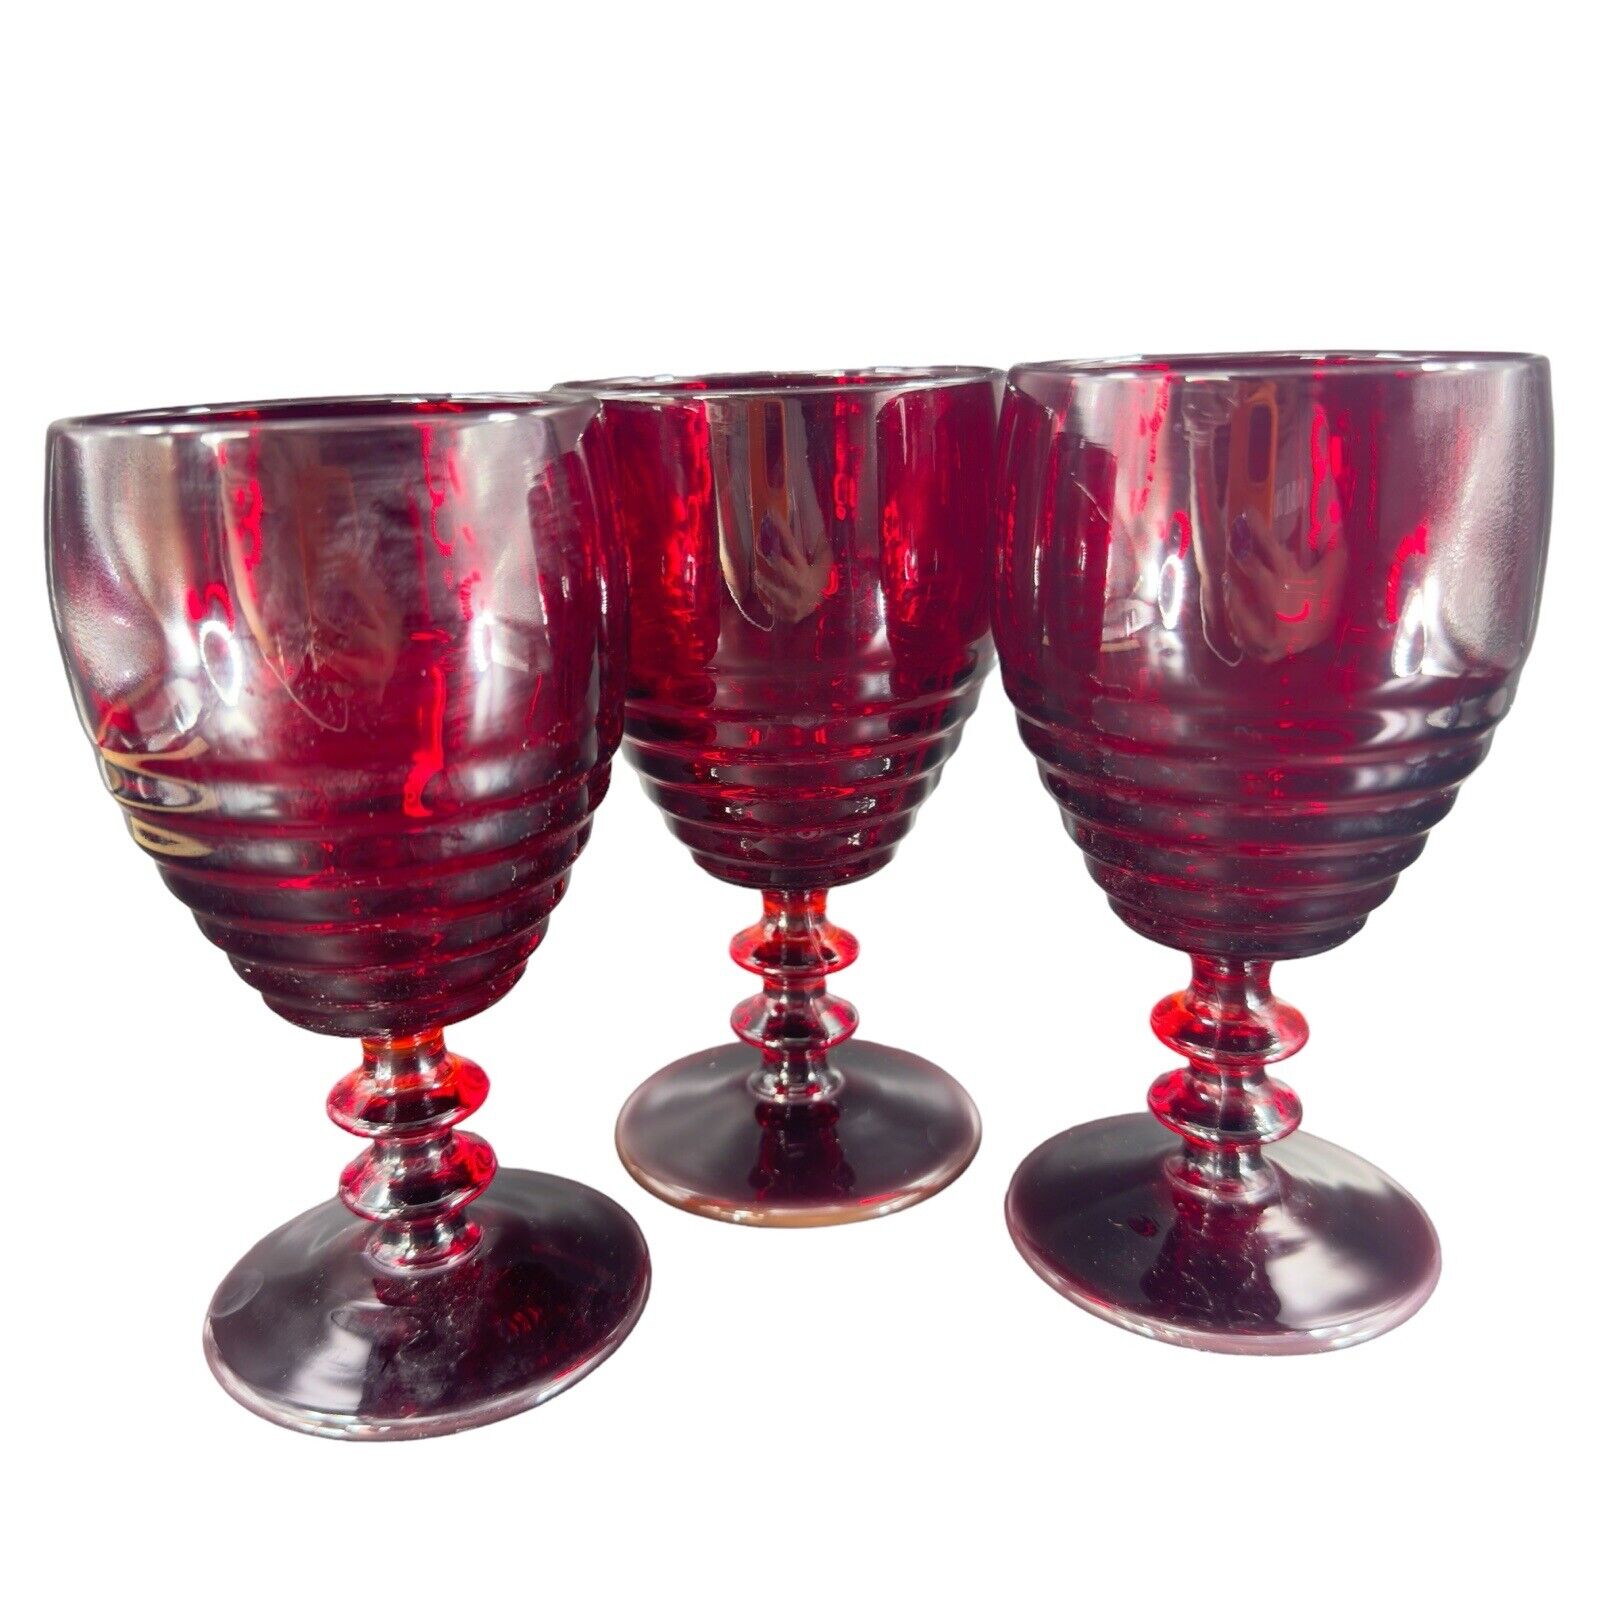 Paden City Penny Line Ruby Red Goblet Drinking Glasses Amberina UV Glow Set 3